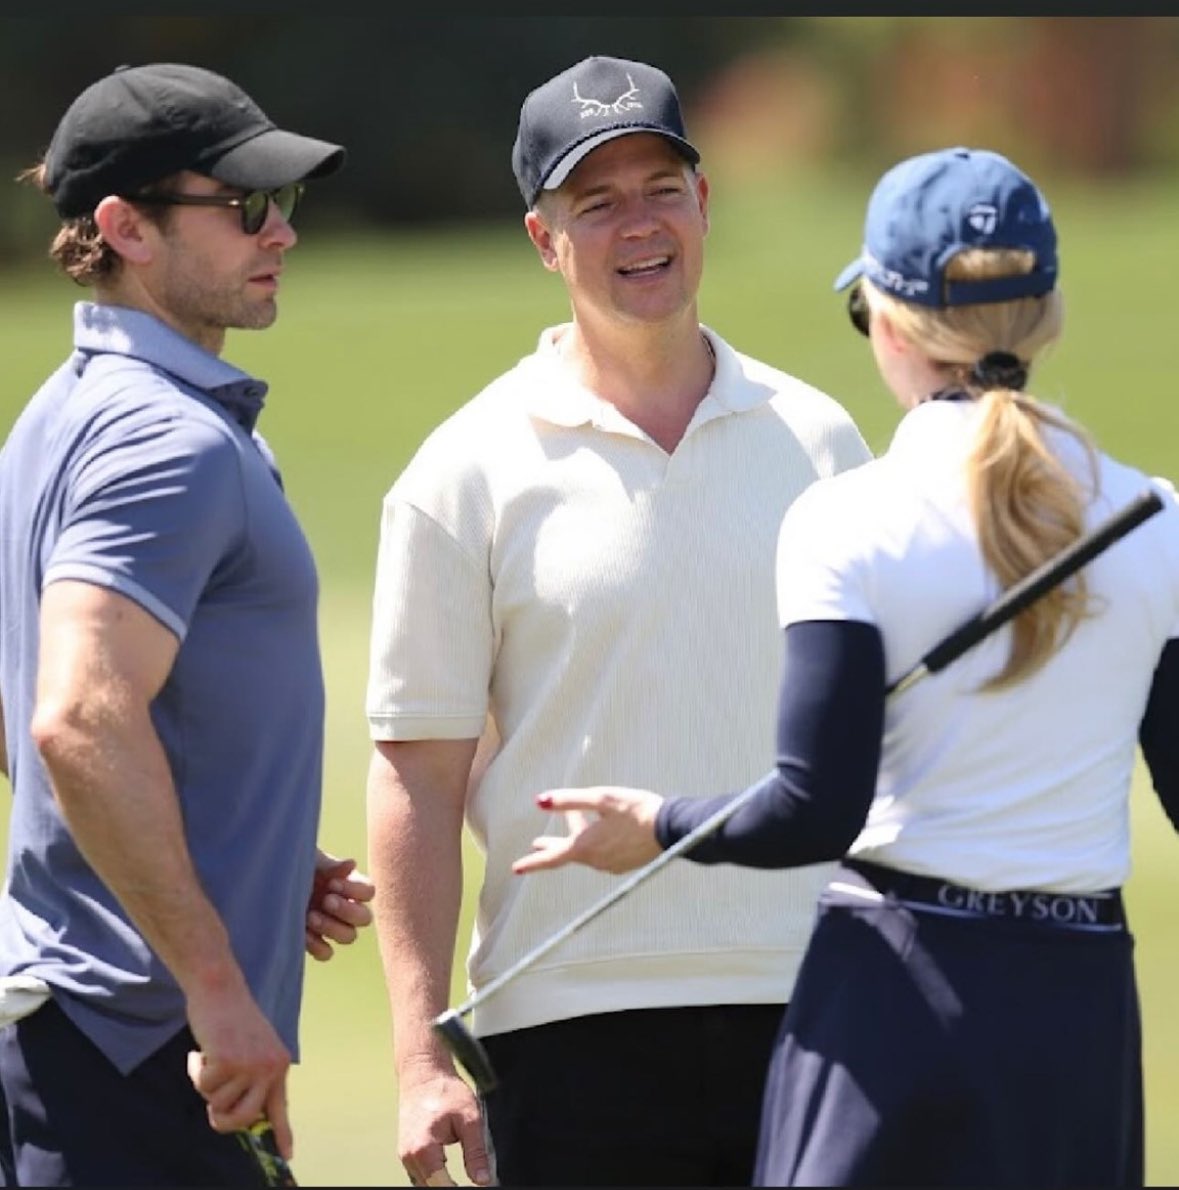 ⭐️ Chace Crawford durante um torneio de golf no fim de semana.

#chacecrawford #gossipgirl #natearchibald #theboys #thedeep #theboystv